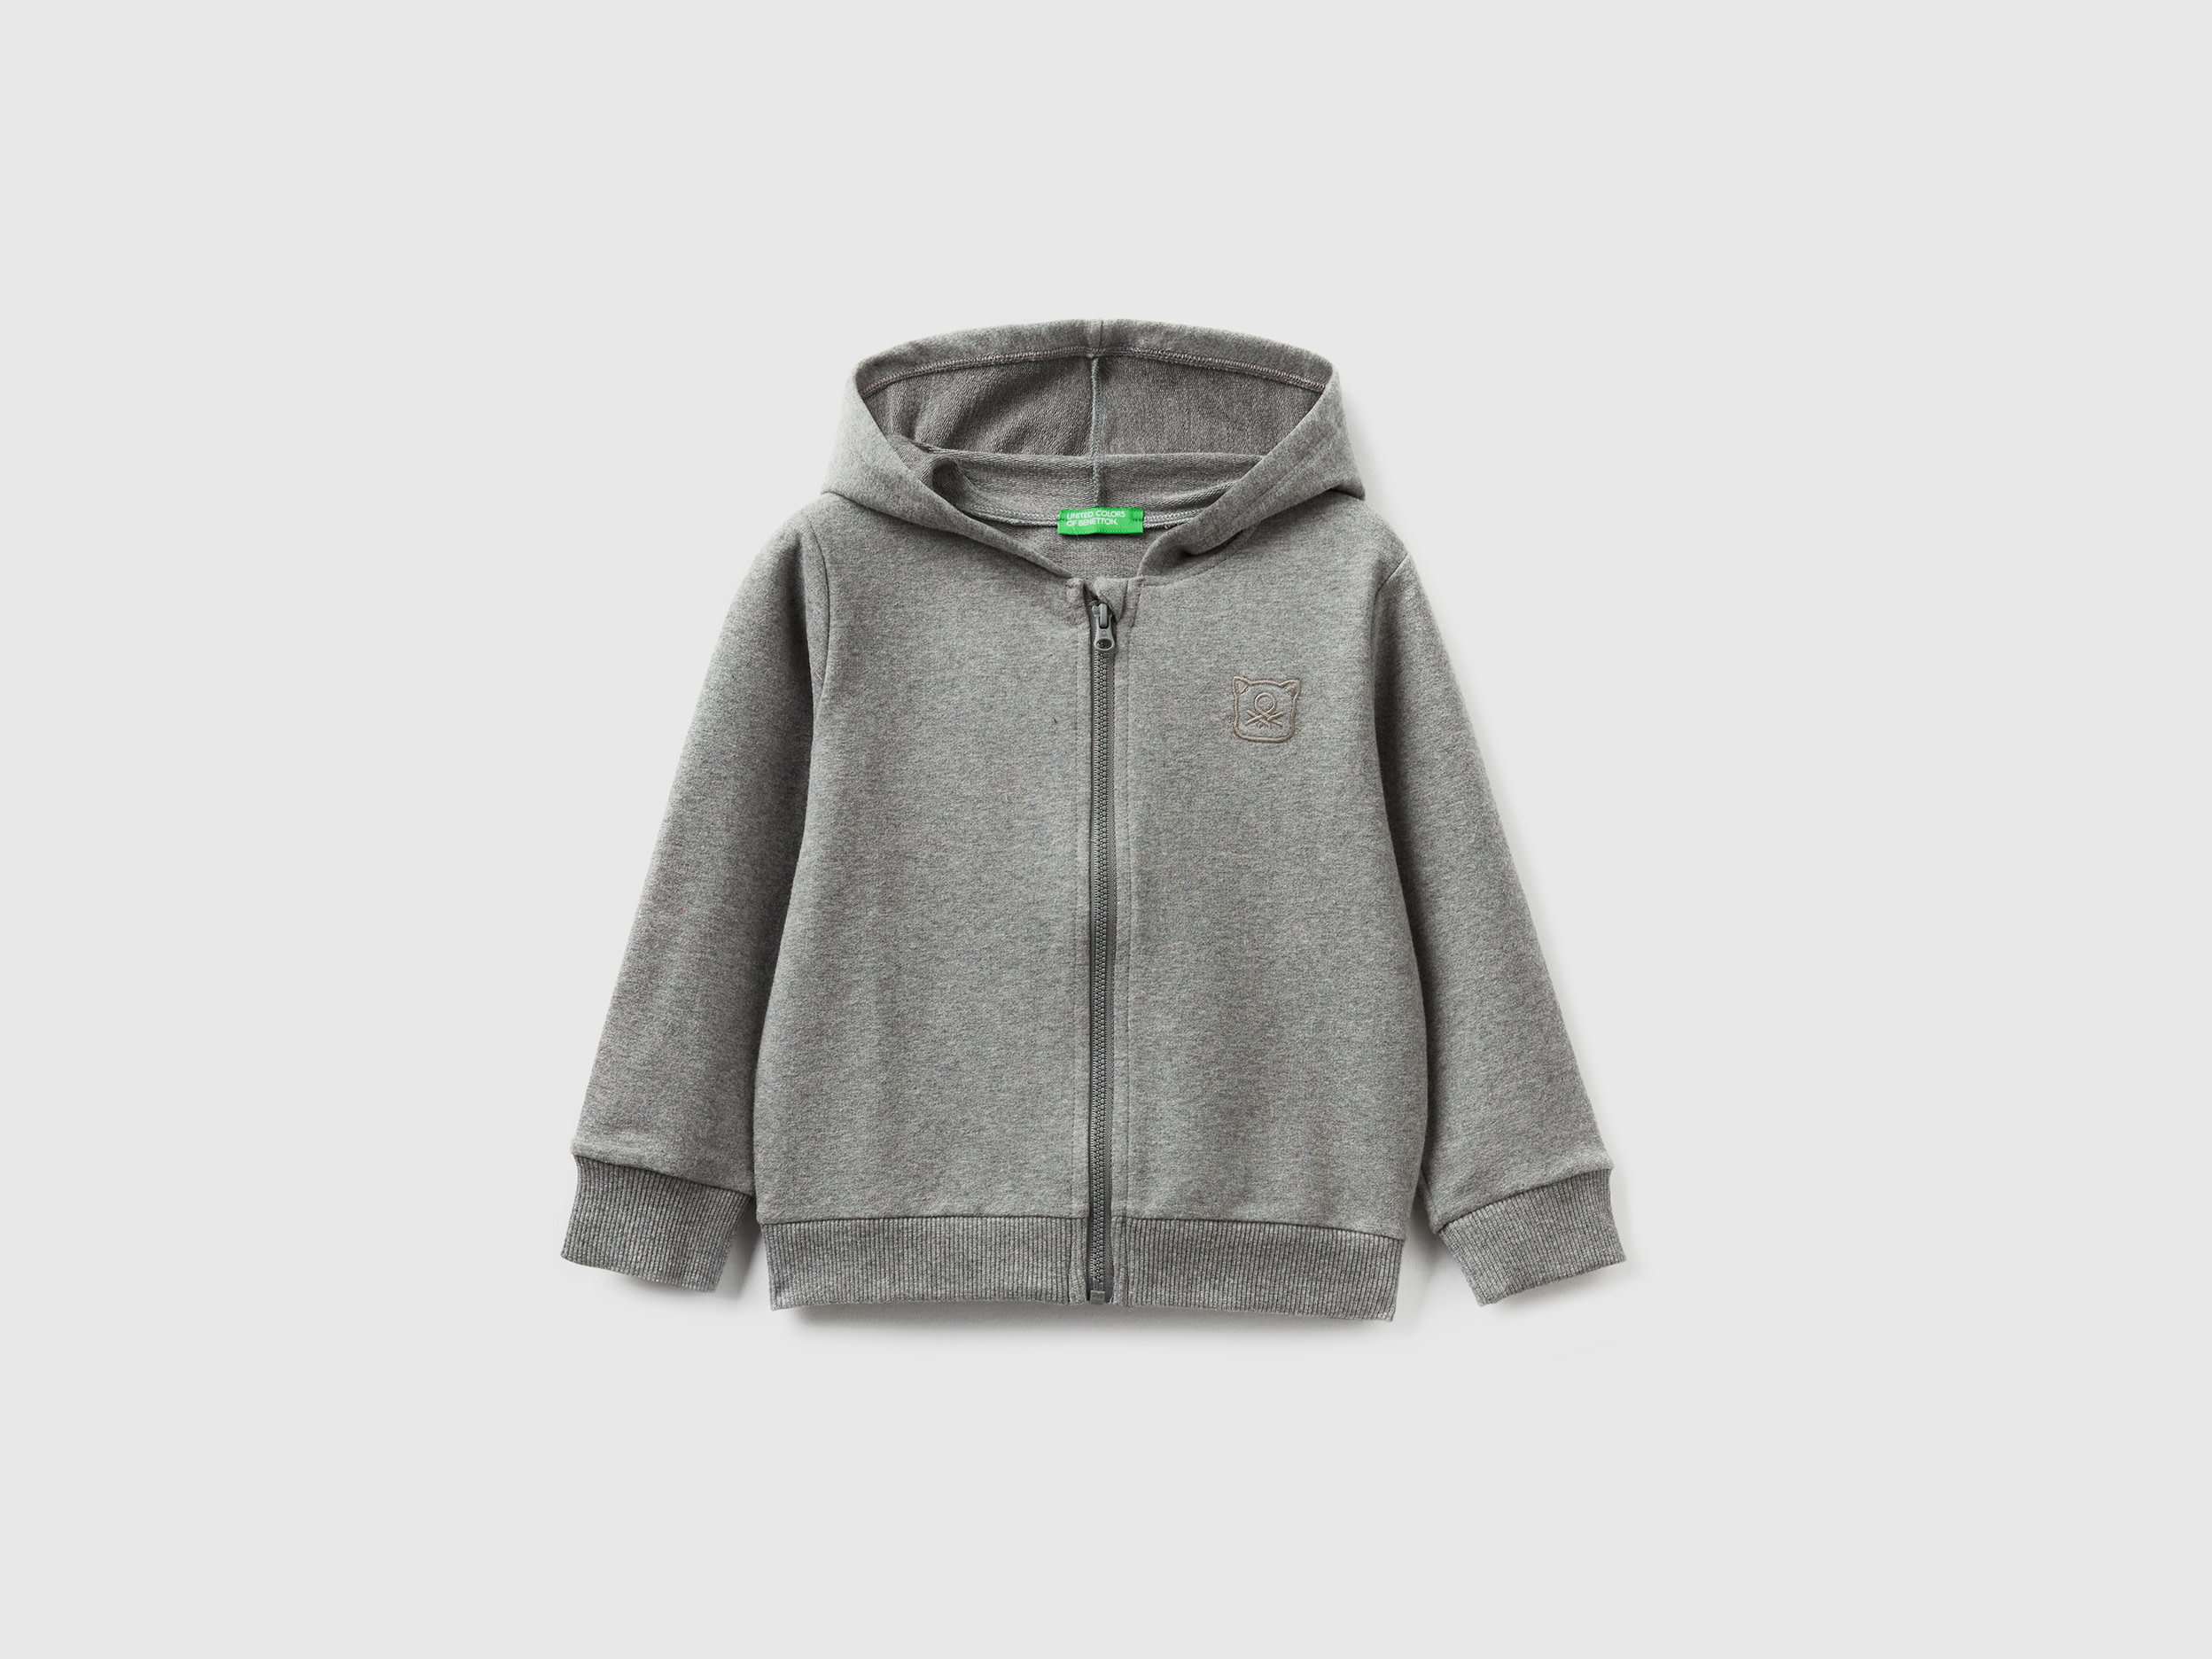 Benetton, Warm Sweatshirt With Zip And Embroidered Logo, size 18-24, Dark Gray, Kids